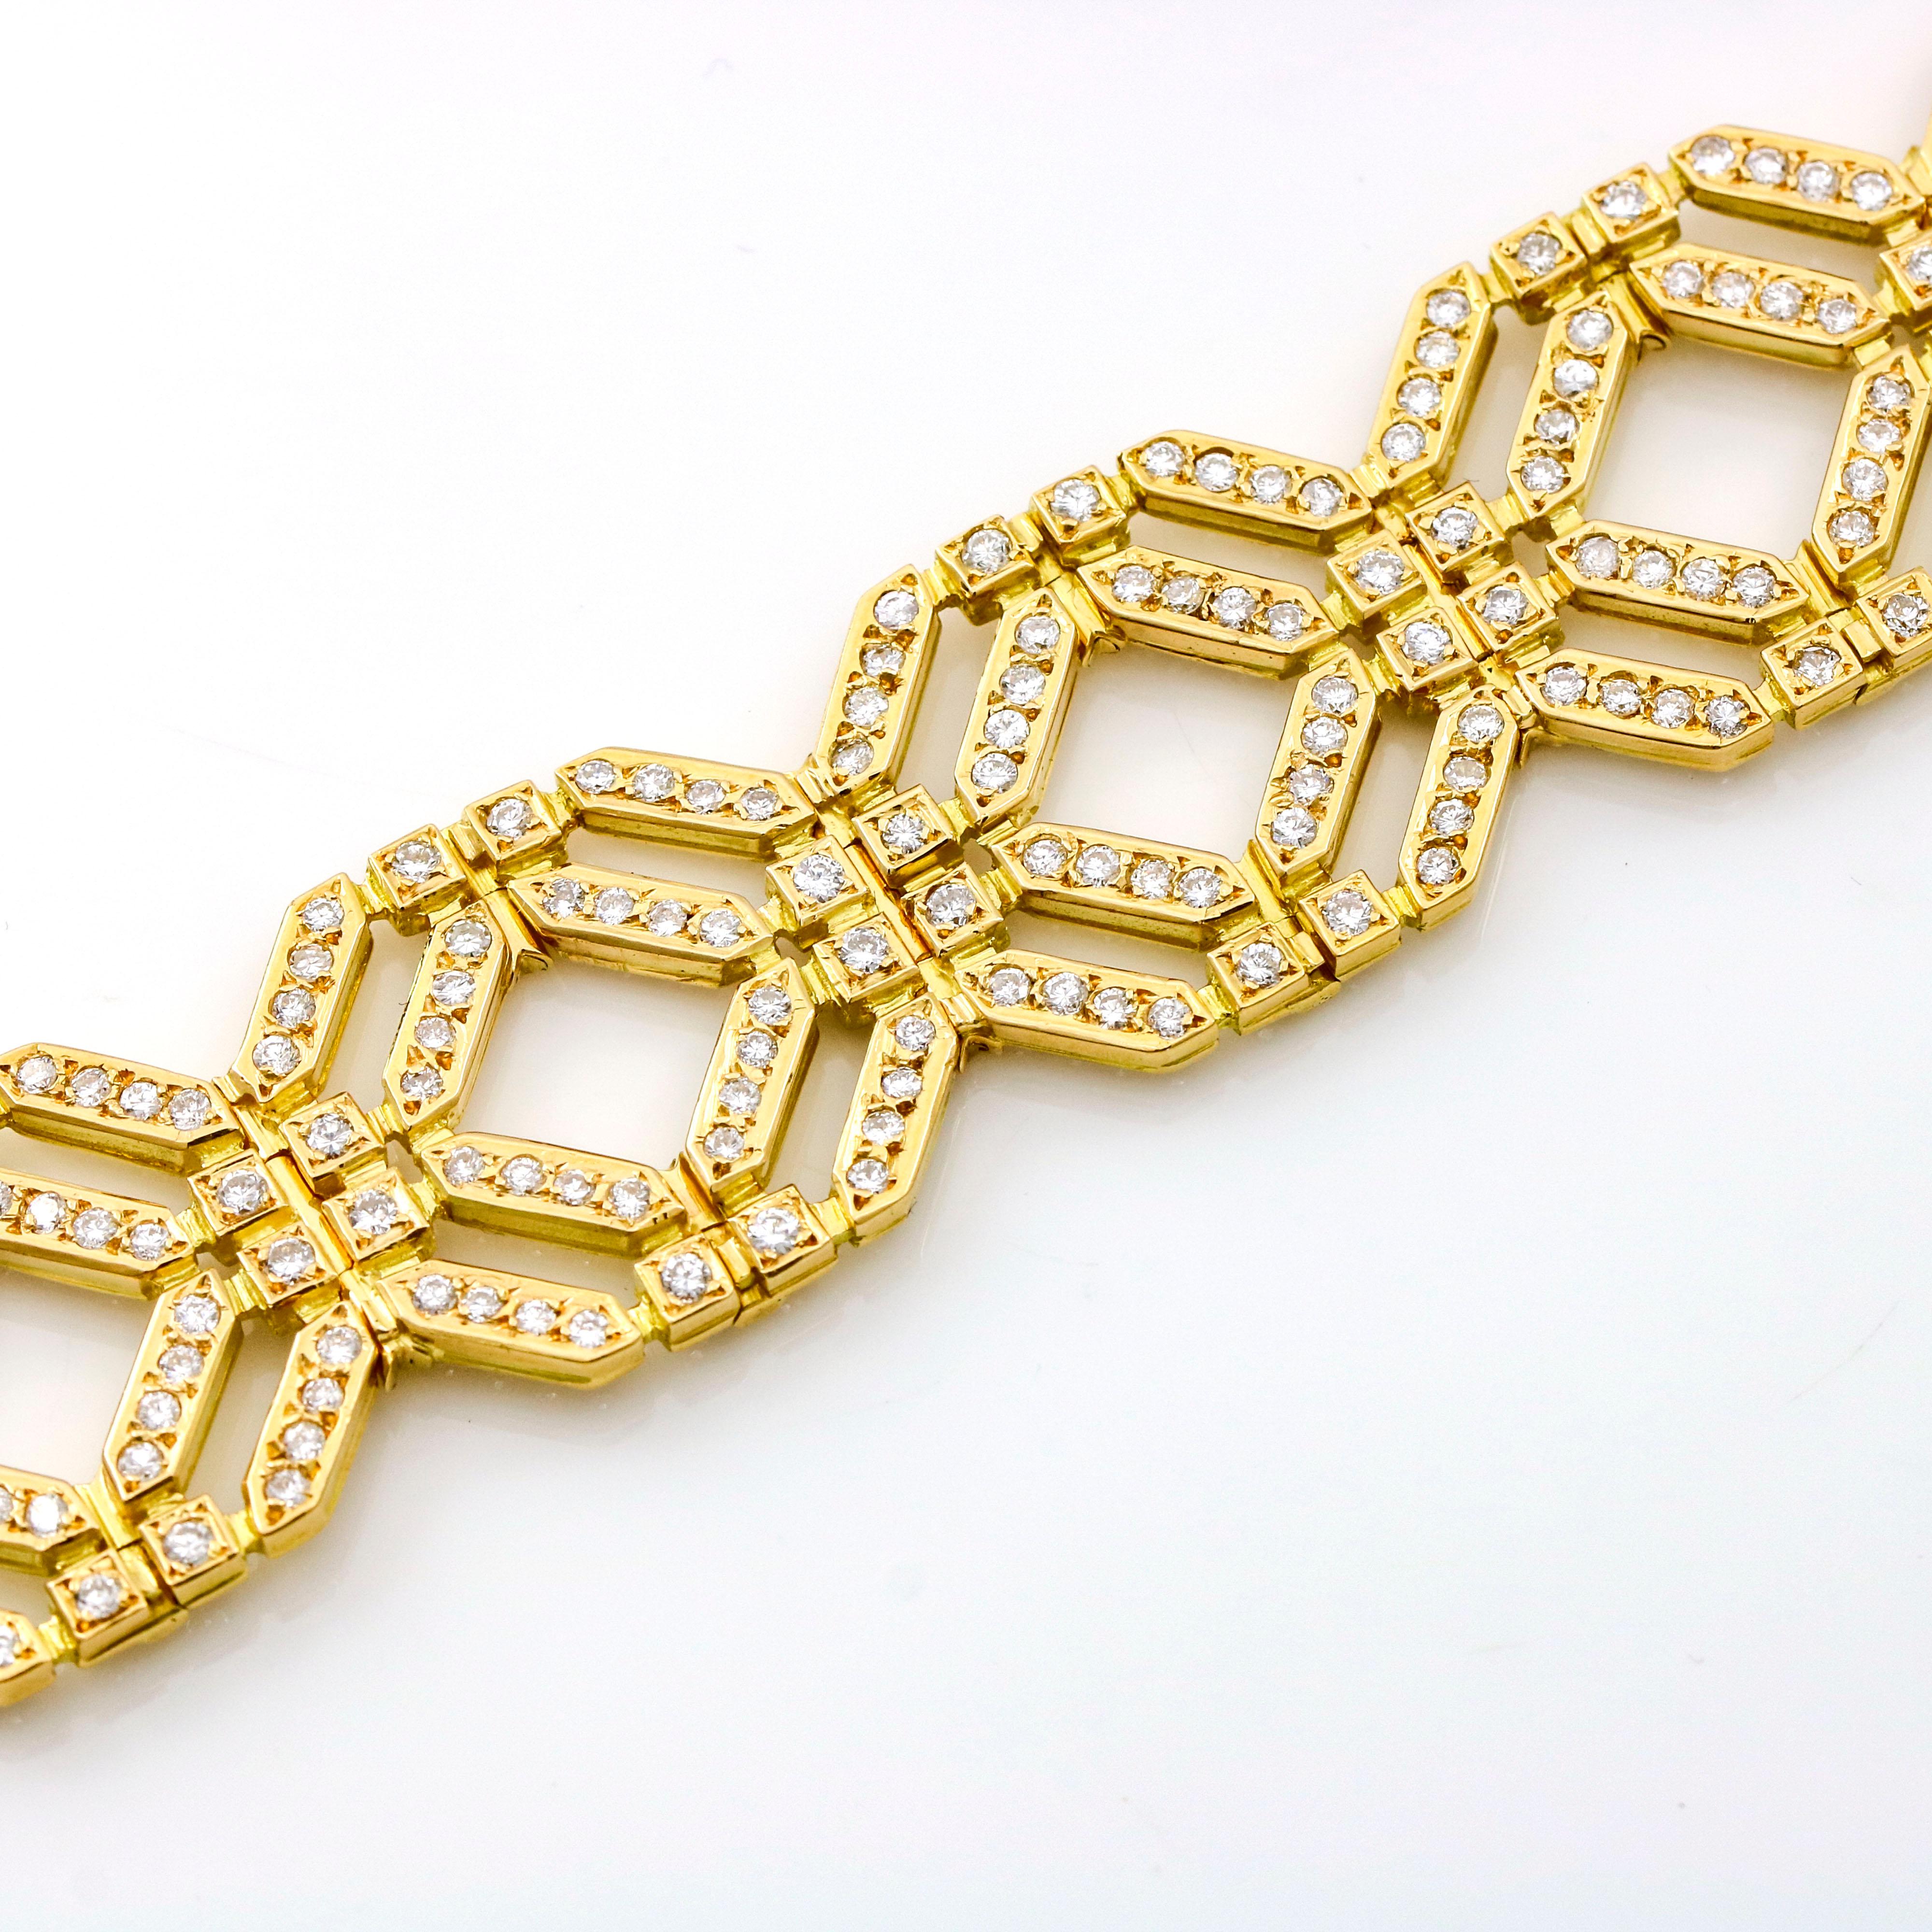 Octagon link bracelet in 18-karat yellow gold with diamonds. The bracelet has 320 round natural diamonds. Diamond color G, clarity VS. Hidden slide clasp. 

Size, Medium
Diamond Total Carat Weight, 8.25 carats 
